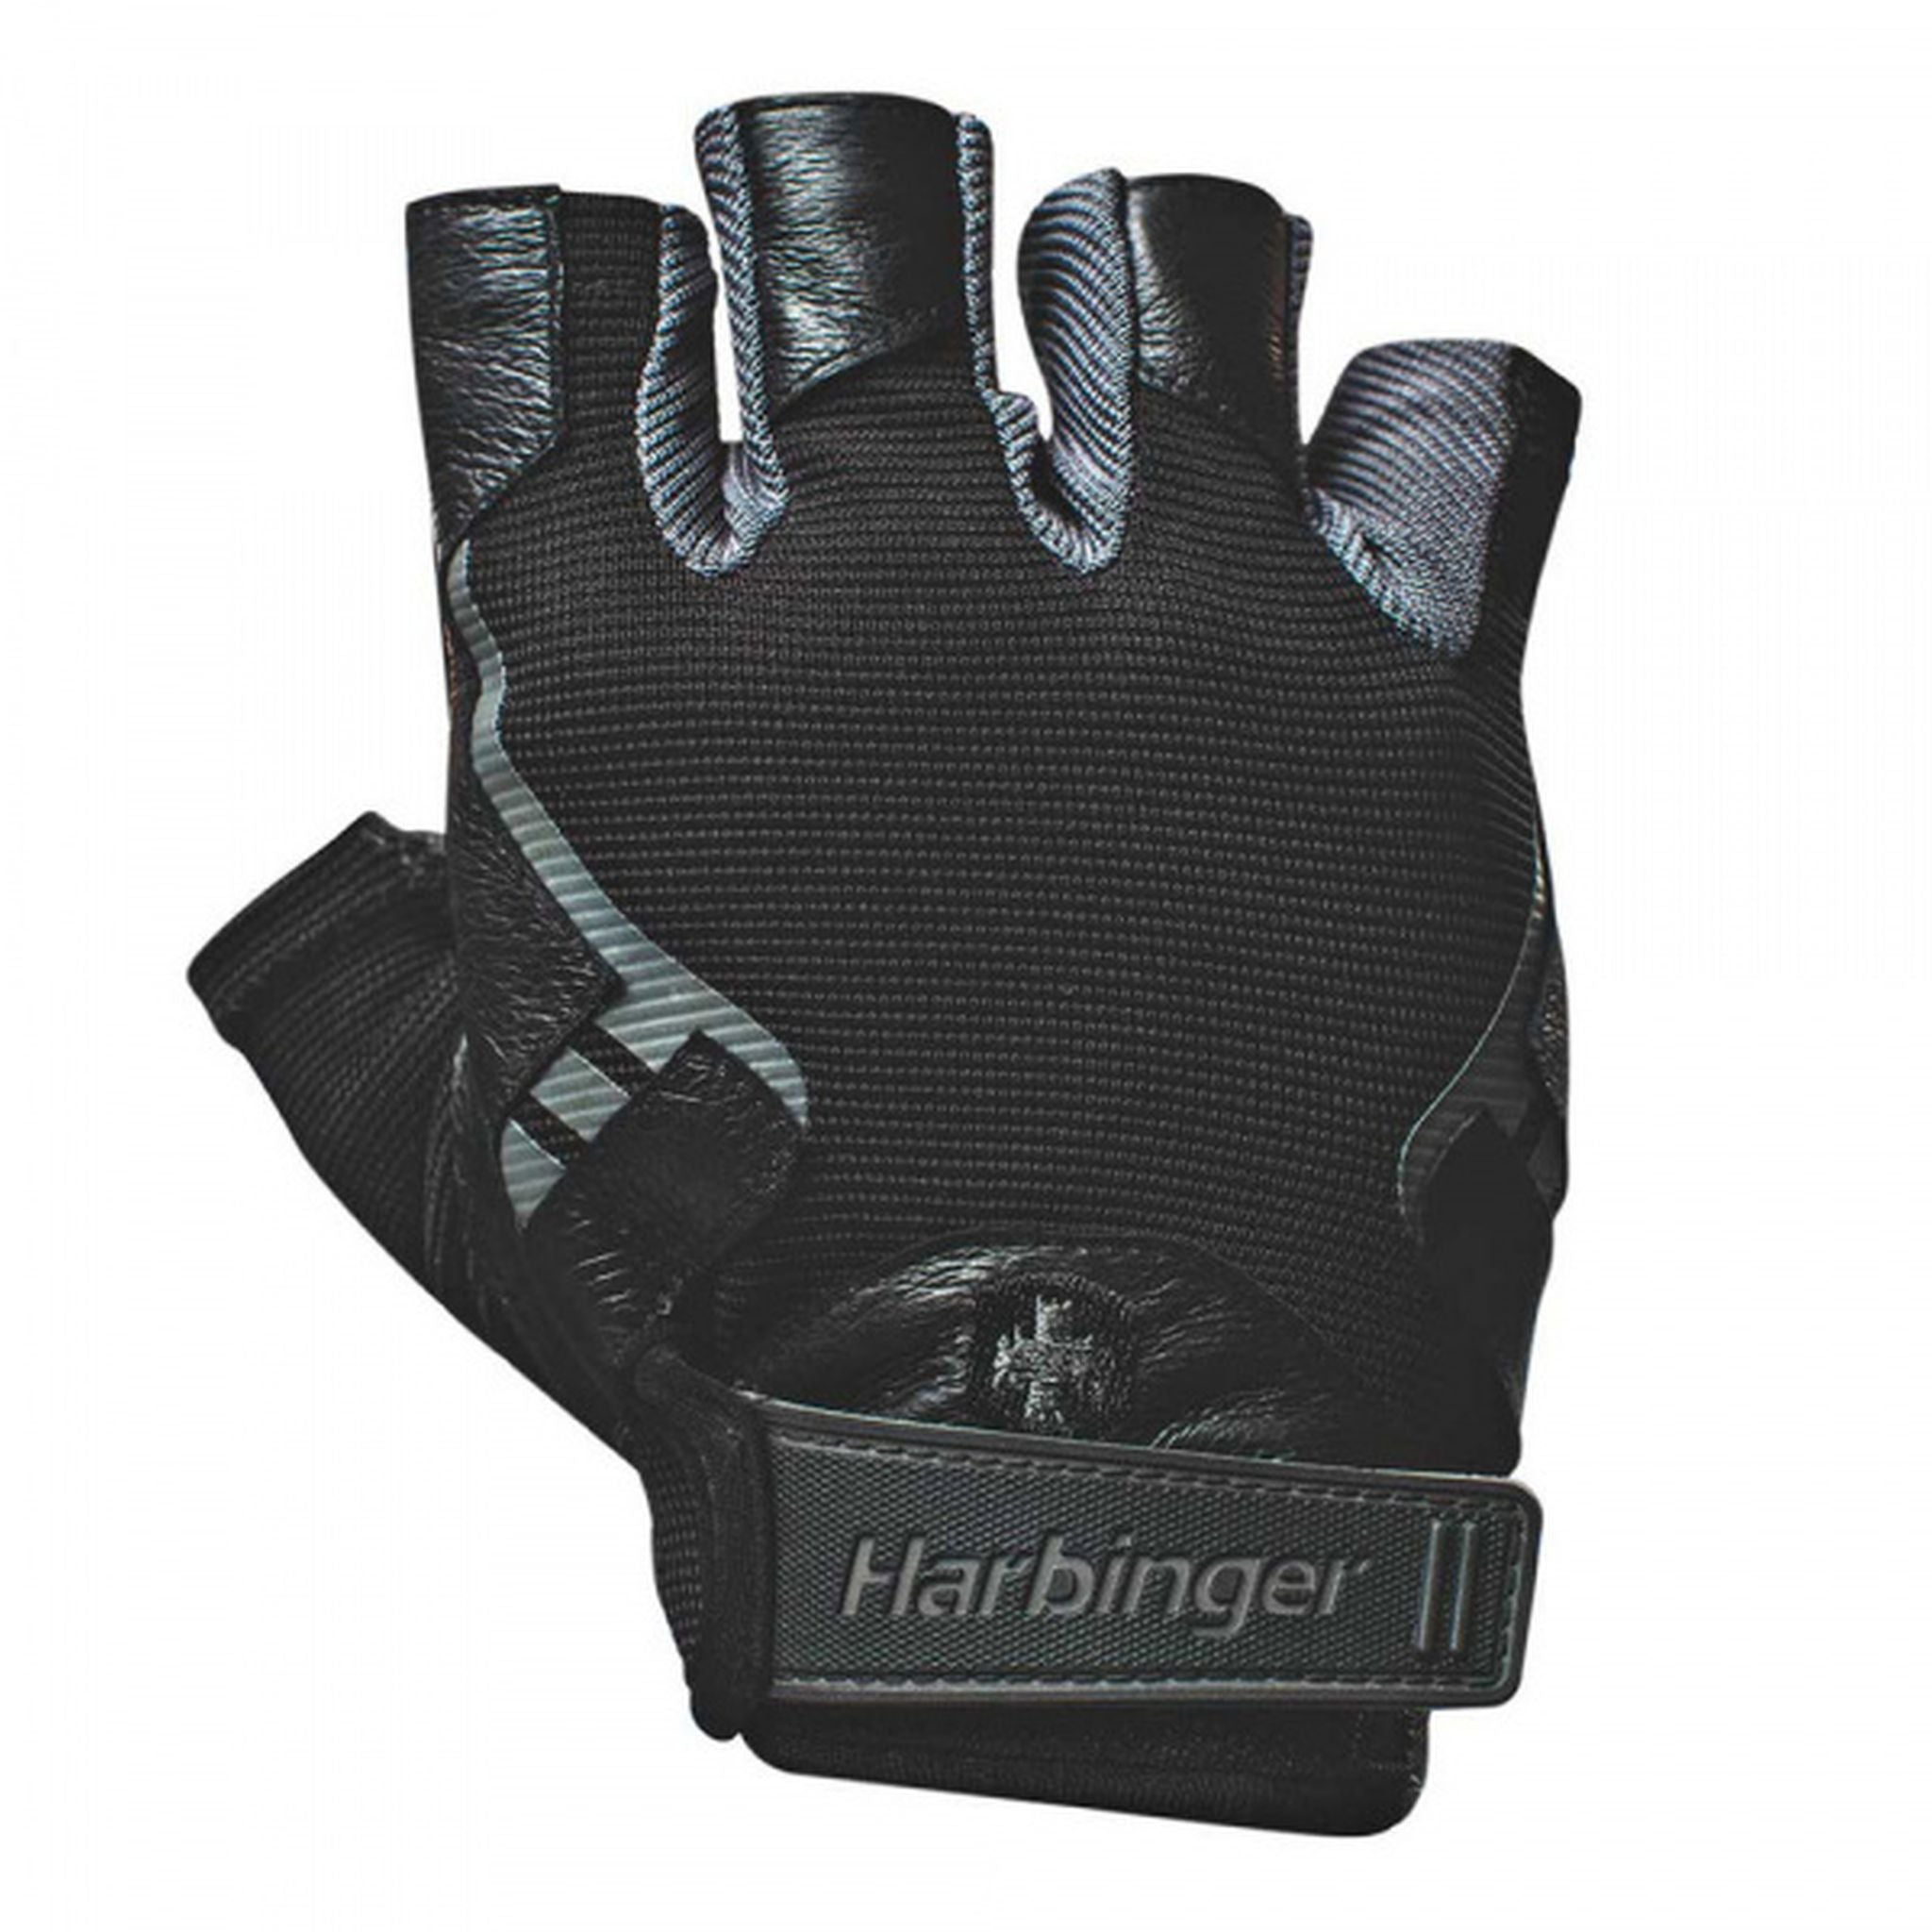 Harbinger Pro Weight Training Gloves